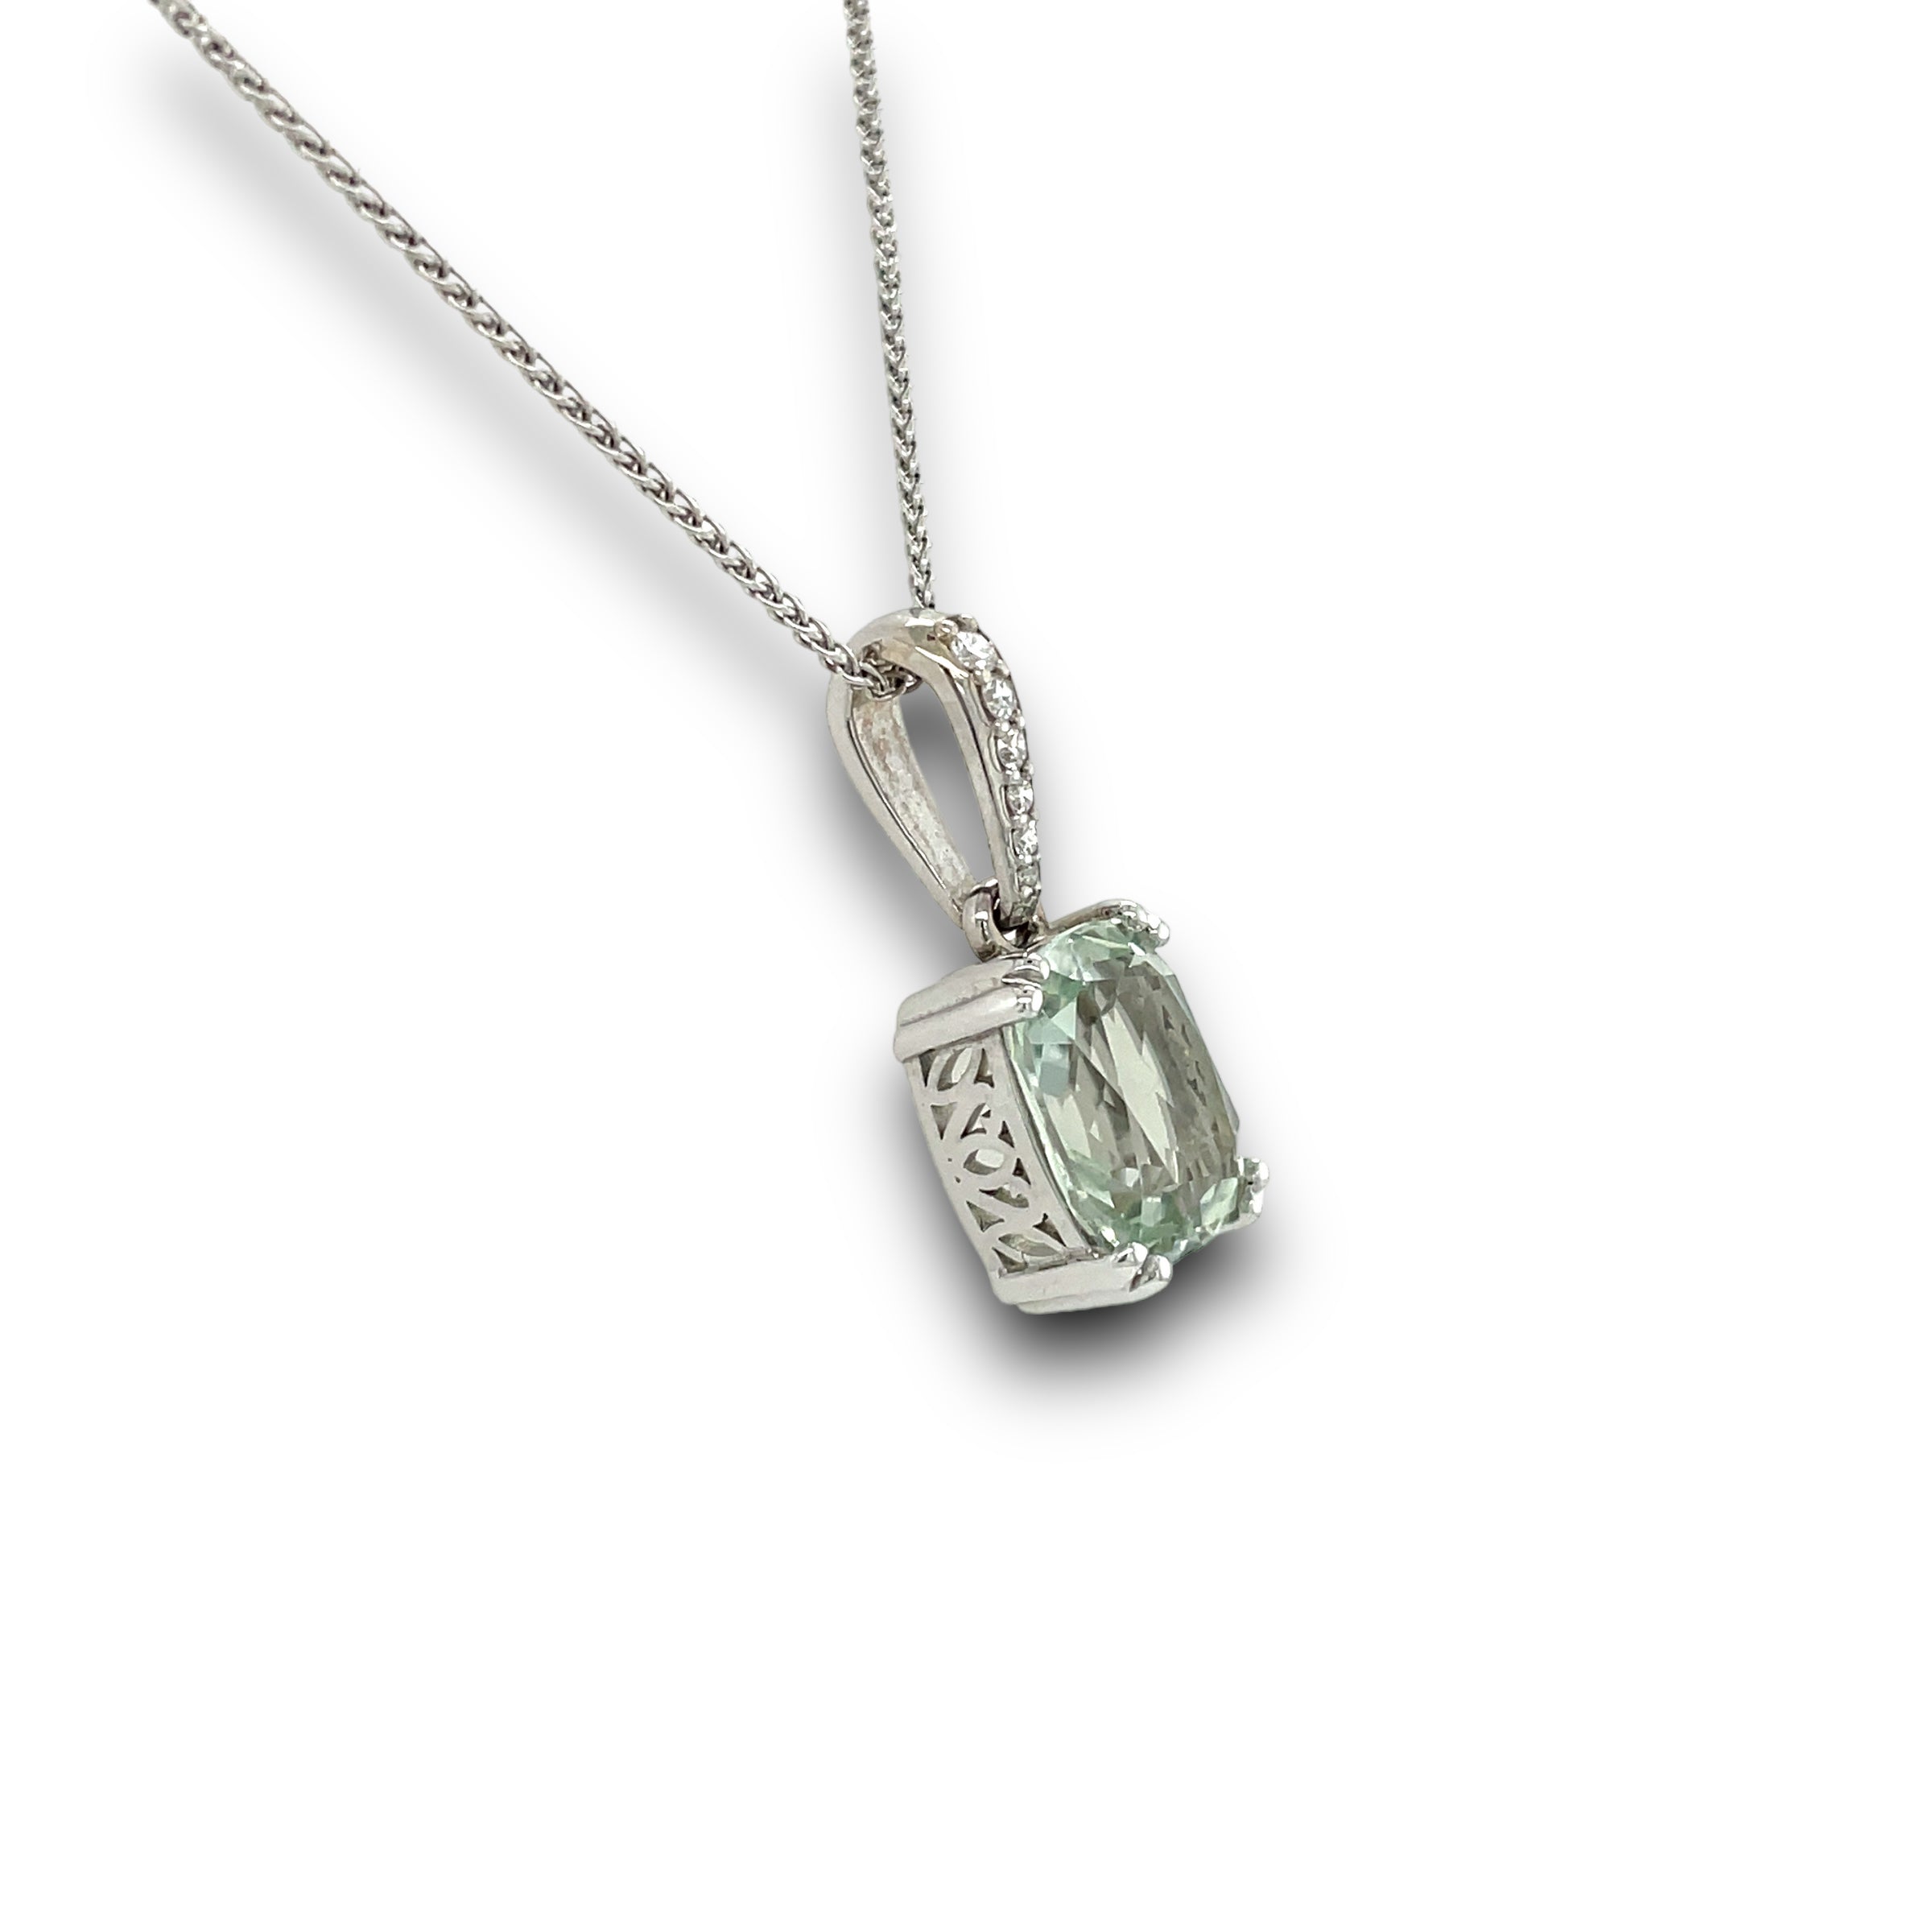 Vari Green Quartz & Diamond Necklace in 14k White Gold